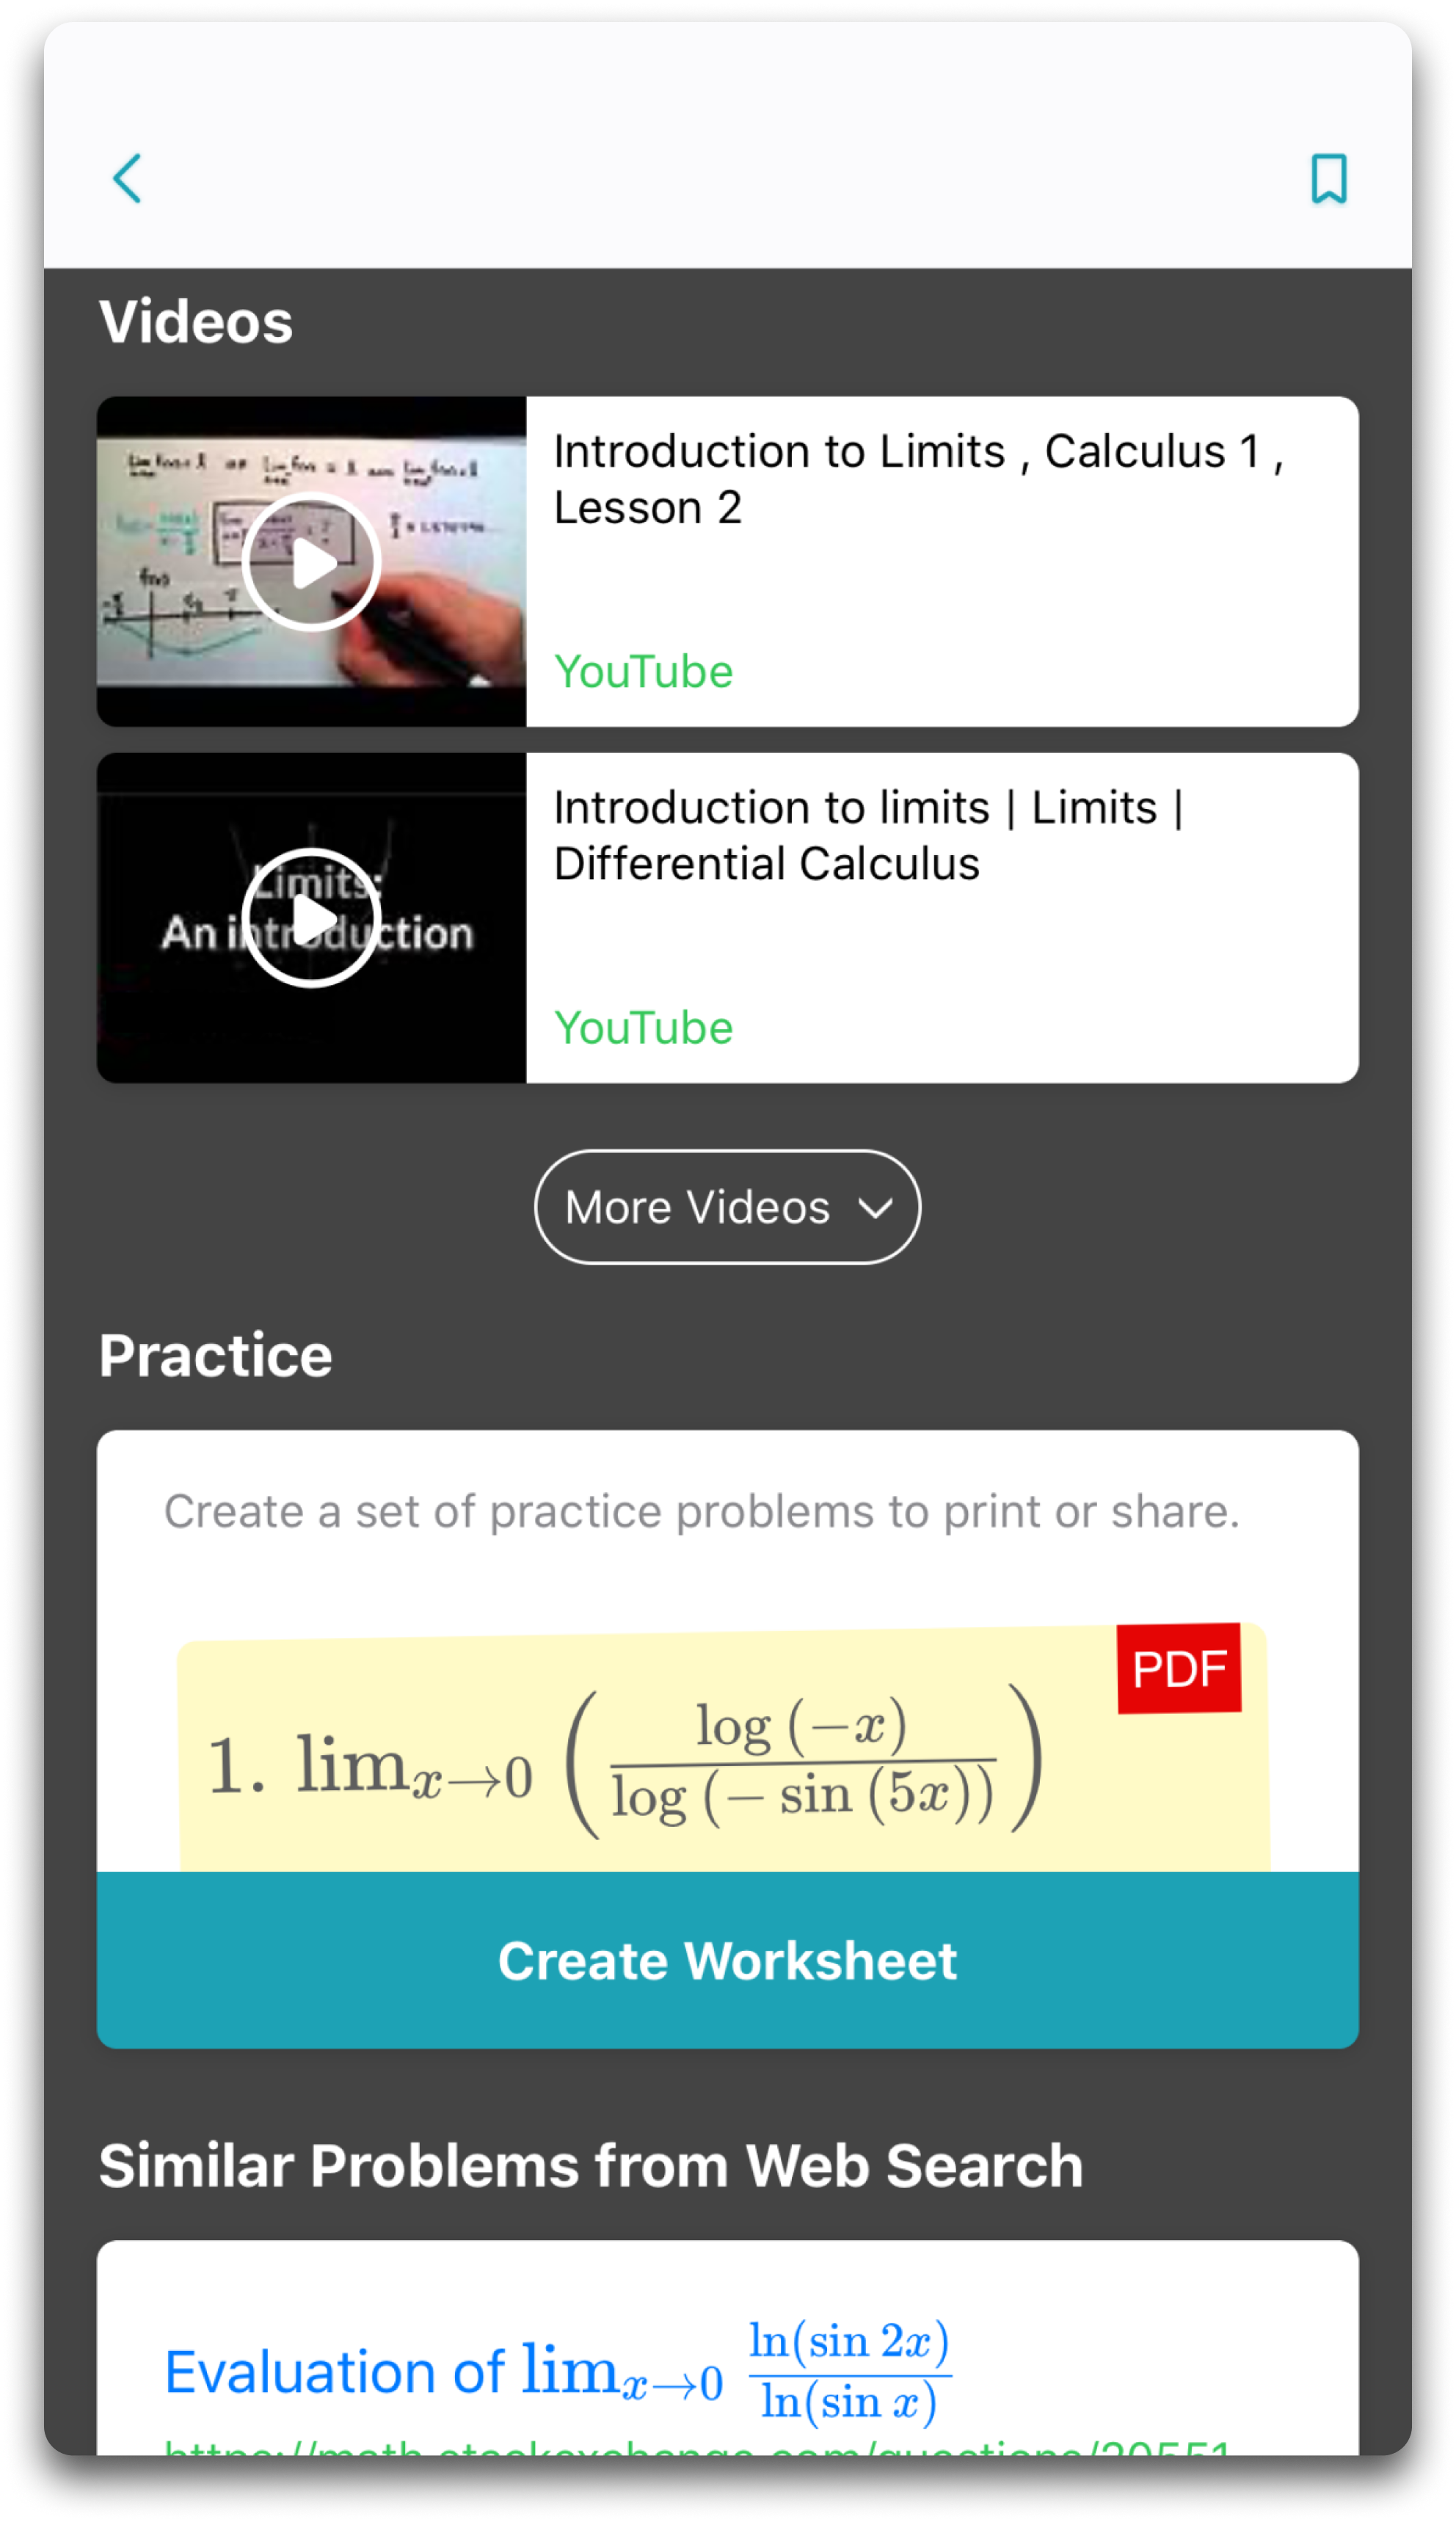 Video tutorials and worksheet for understanding calculus in Microsoft Math Solver App